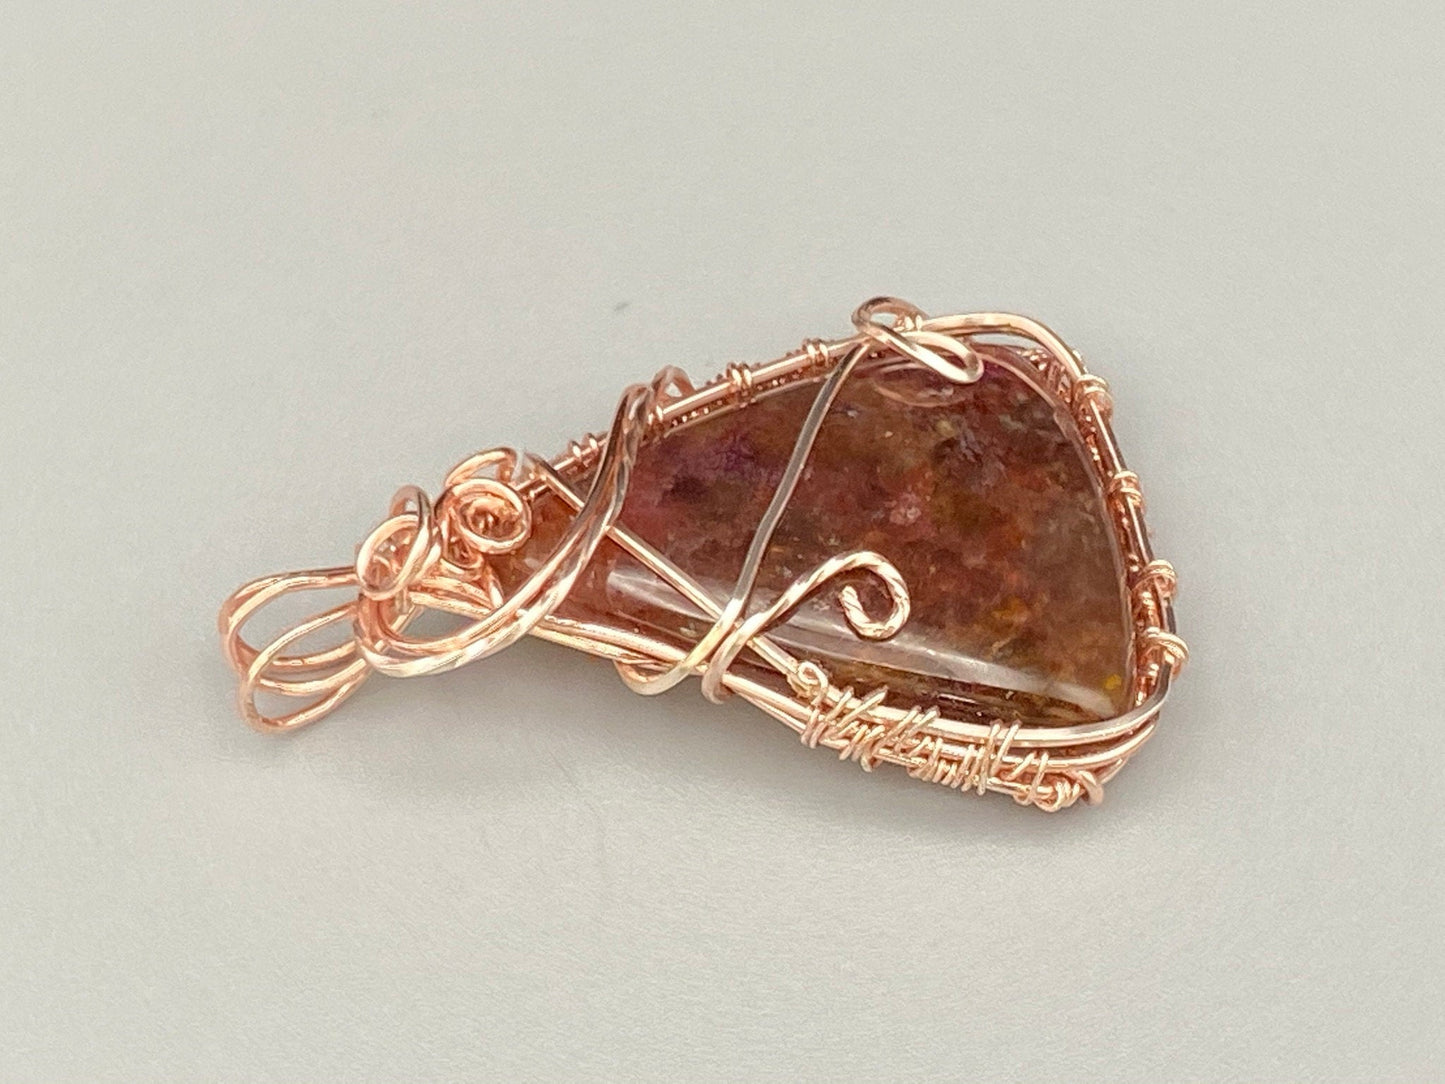 Cherry Quartz Stone Pendant Wire Wrapped in Rose Gold Wire